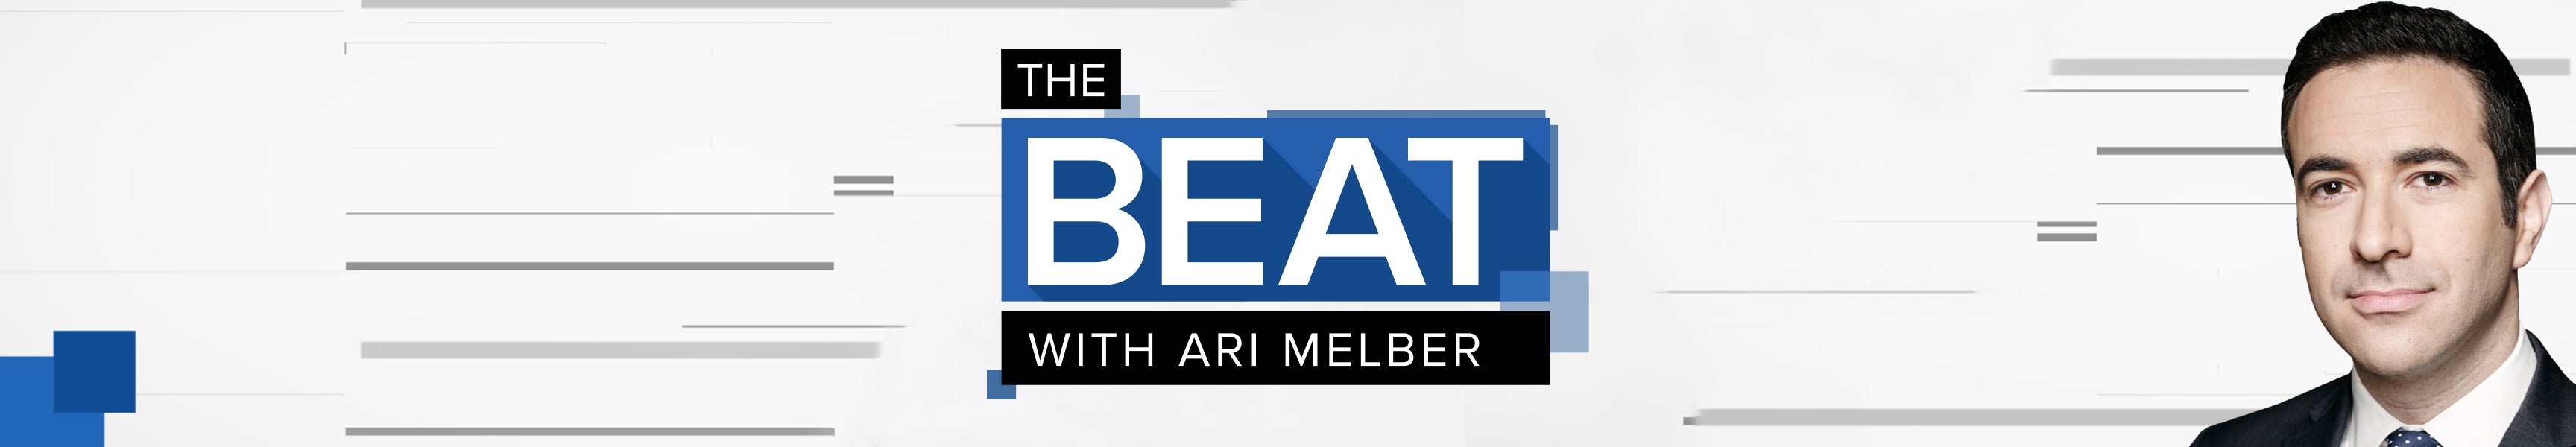 The Beat with Ari Melber